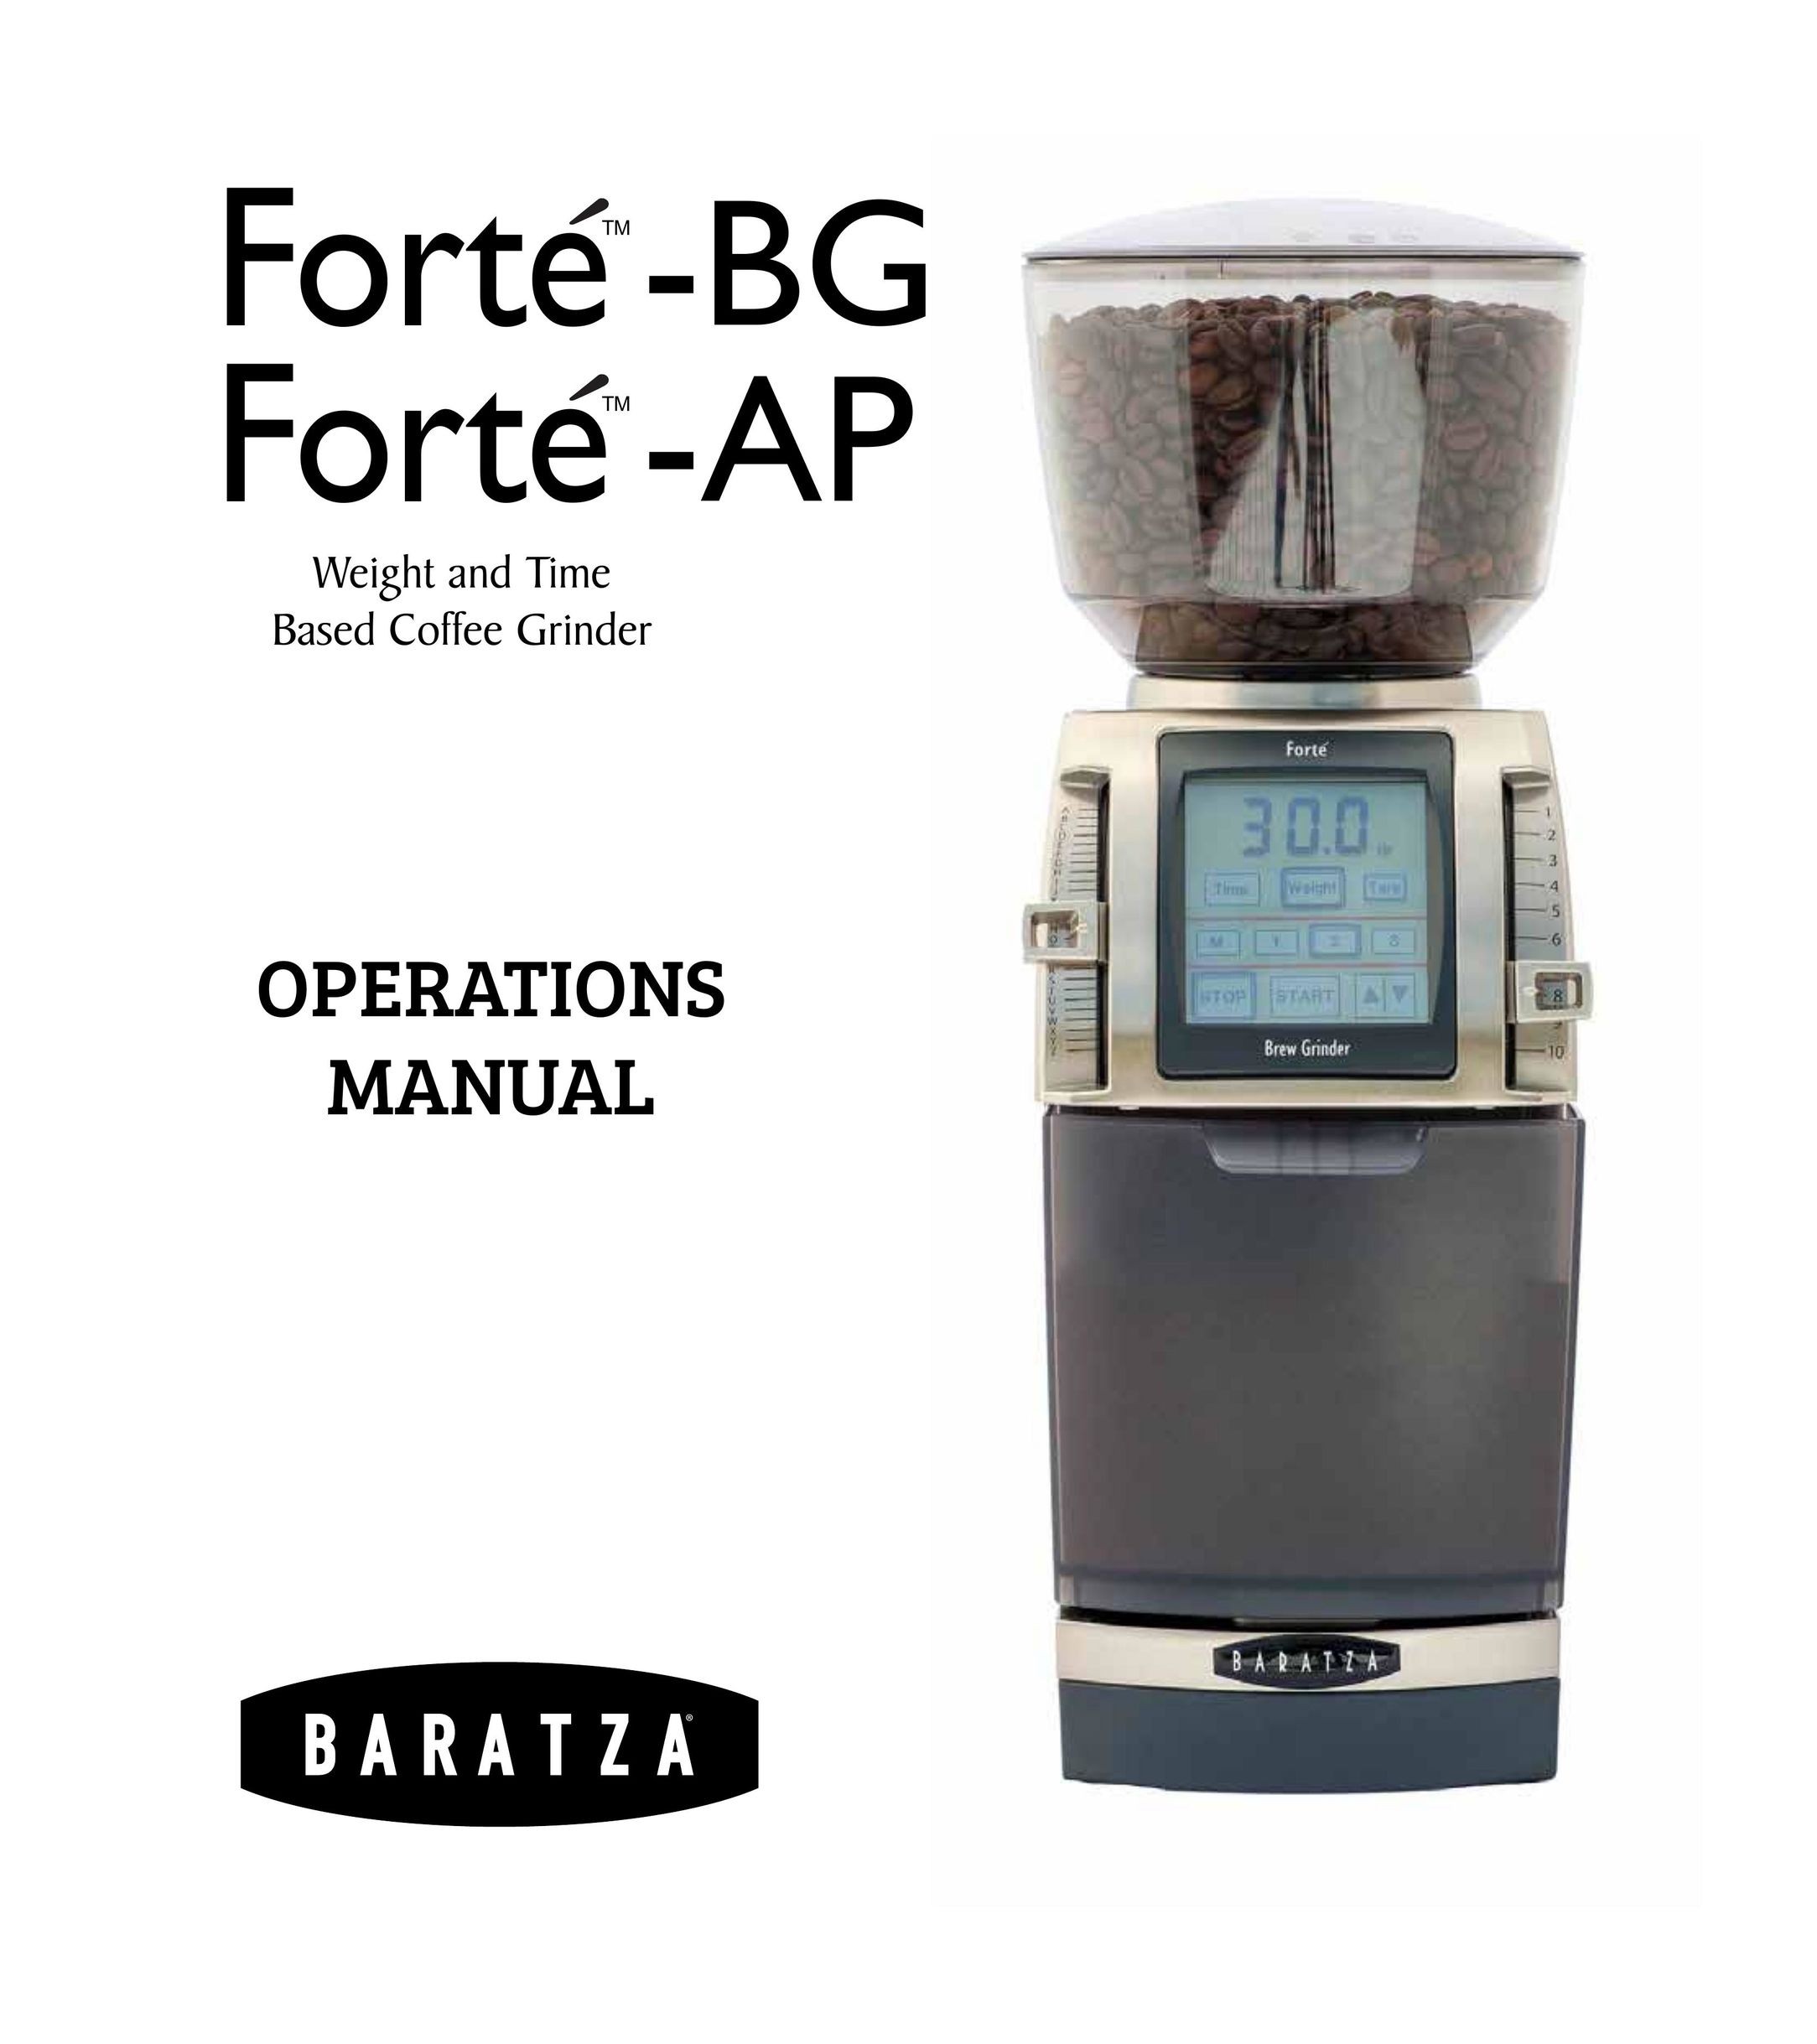 Baratza Forte-BG Coffeemaker User Manual